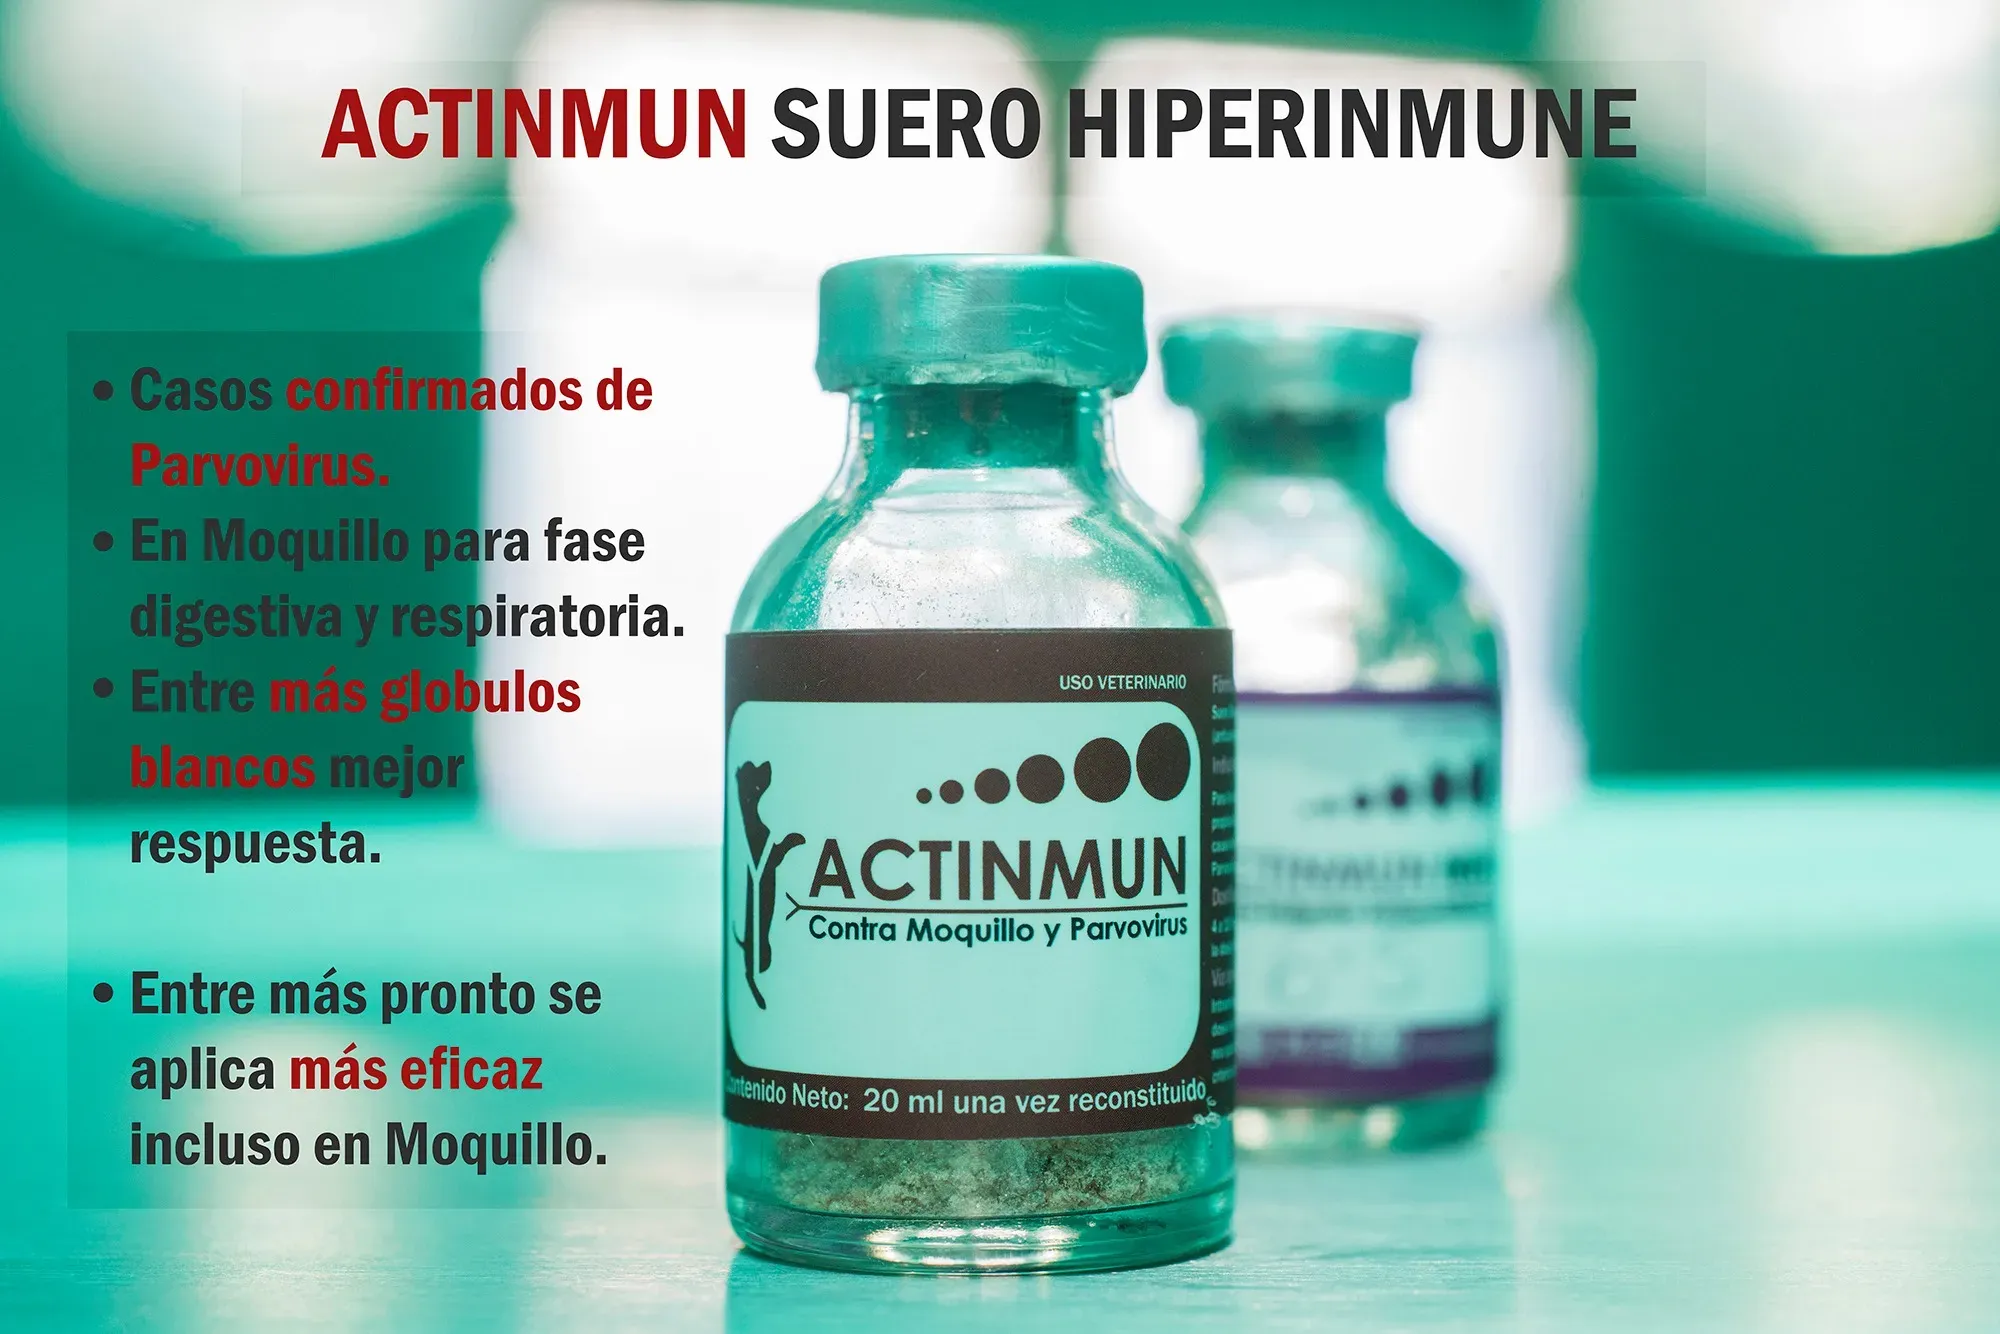 Actinmun SHP (Suero Hiperinmune Policlonal) 